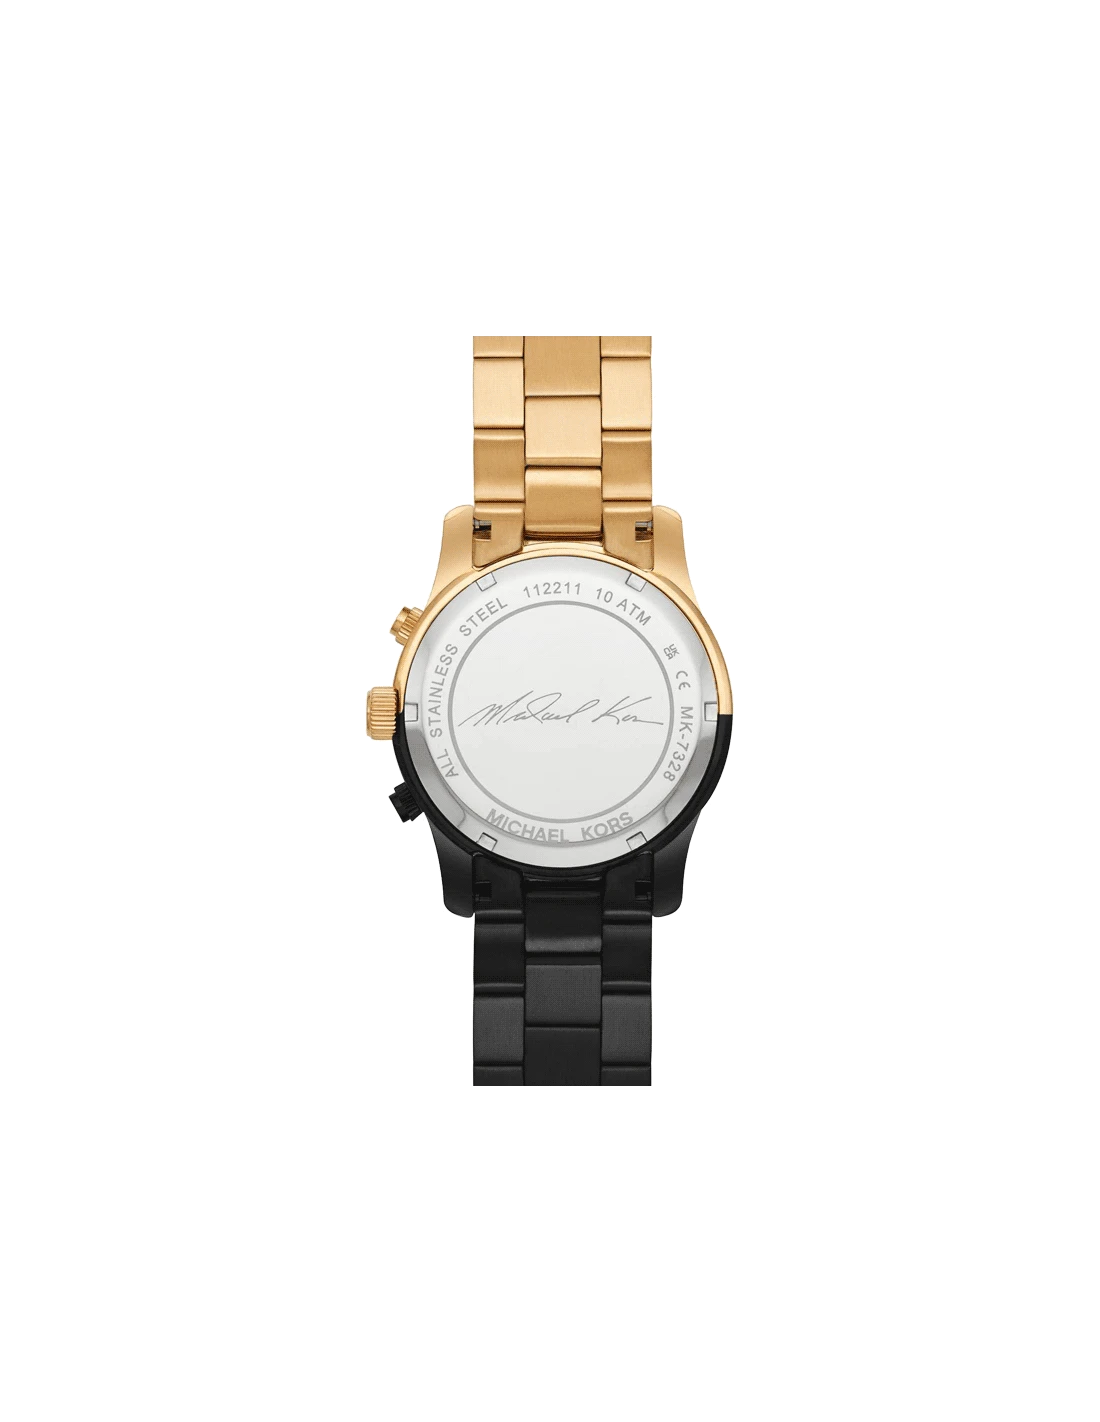 Michael Kors Runway 38 mm Black Dial Stainless Steel Chronograph Watch for Women - MK7328 - Kamal Watch Company